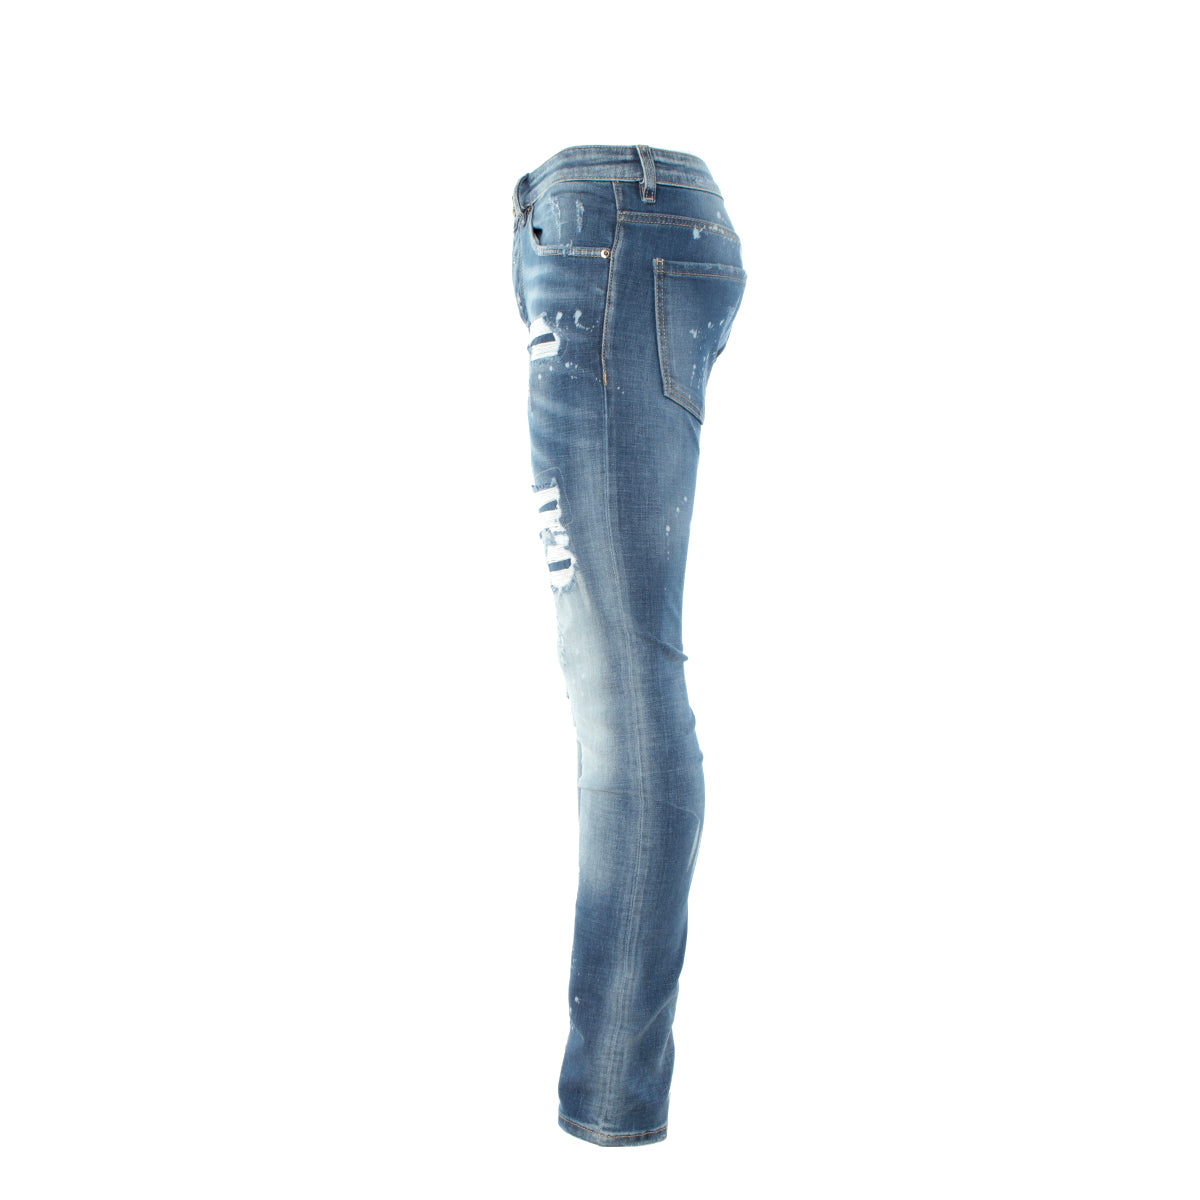 7th Heaven London S465 Men's Designer Jeans